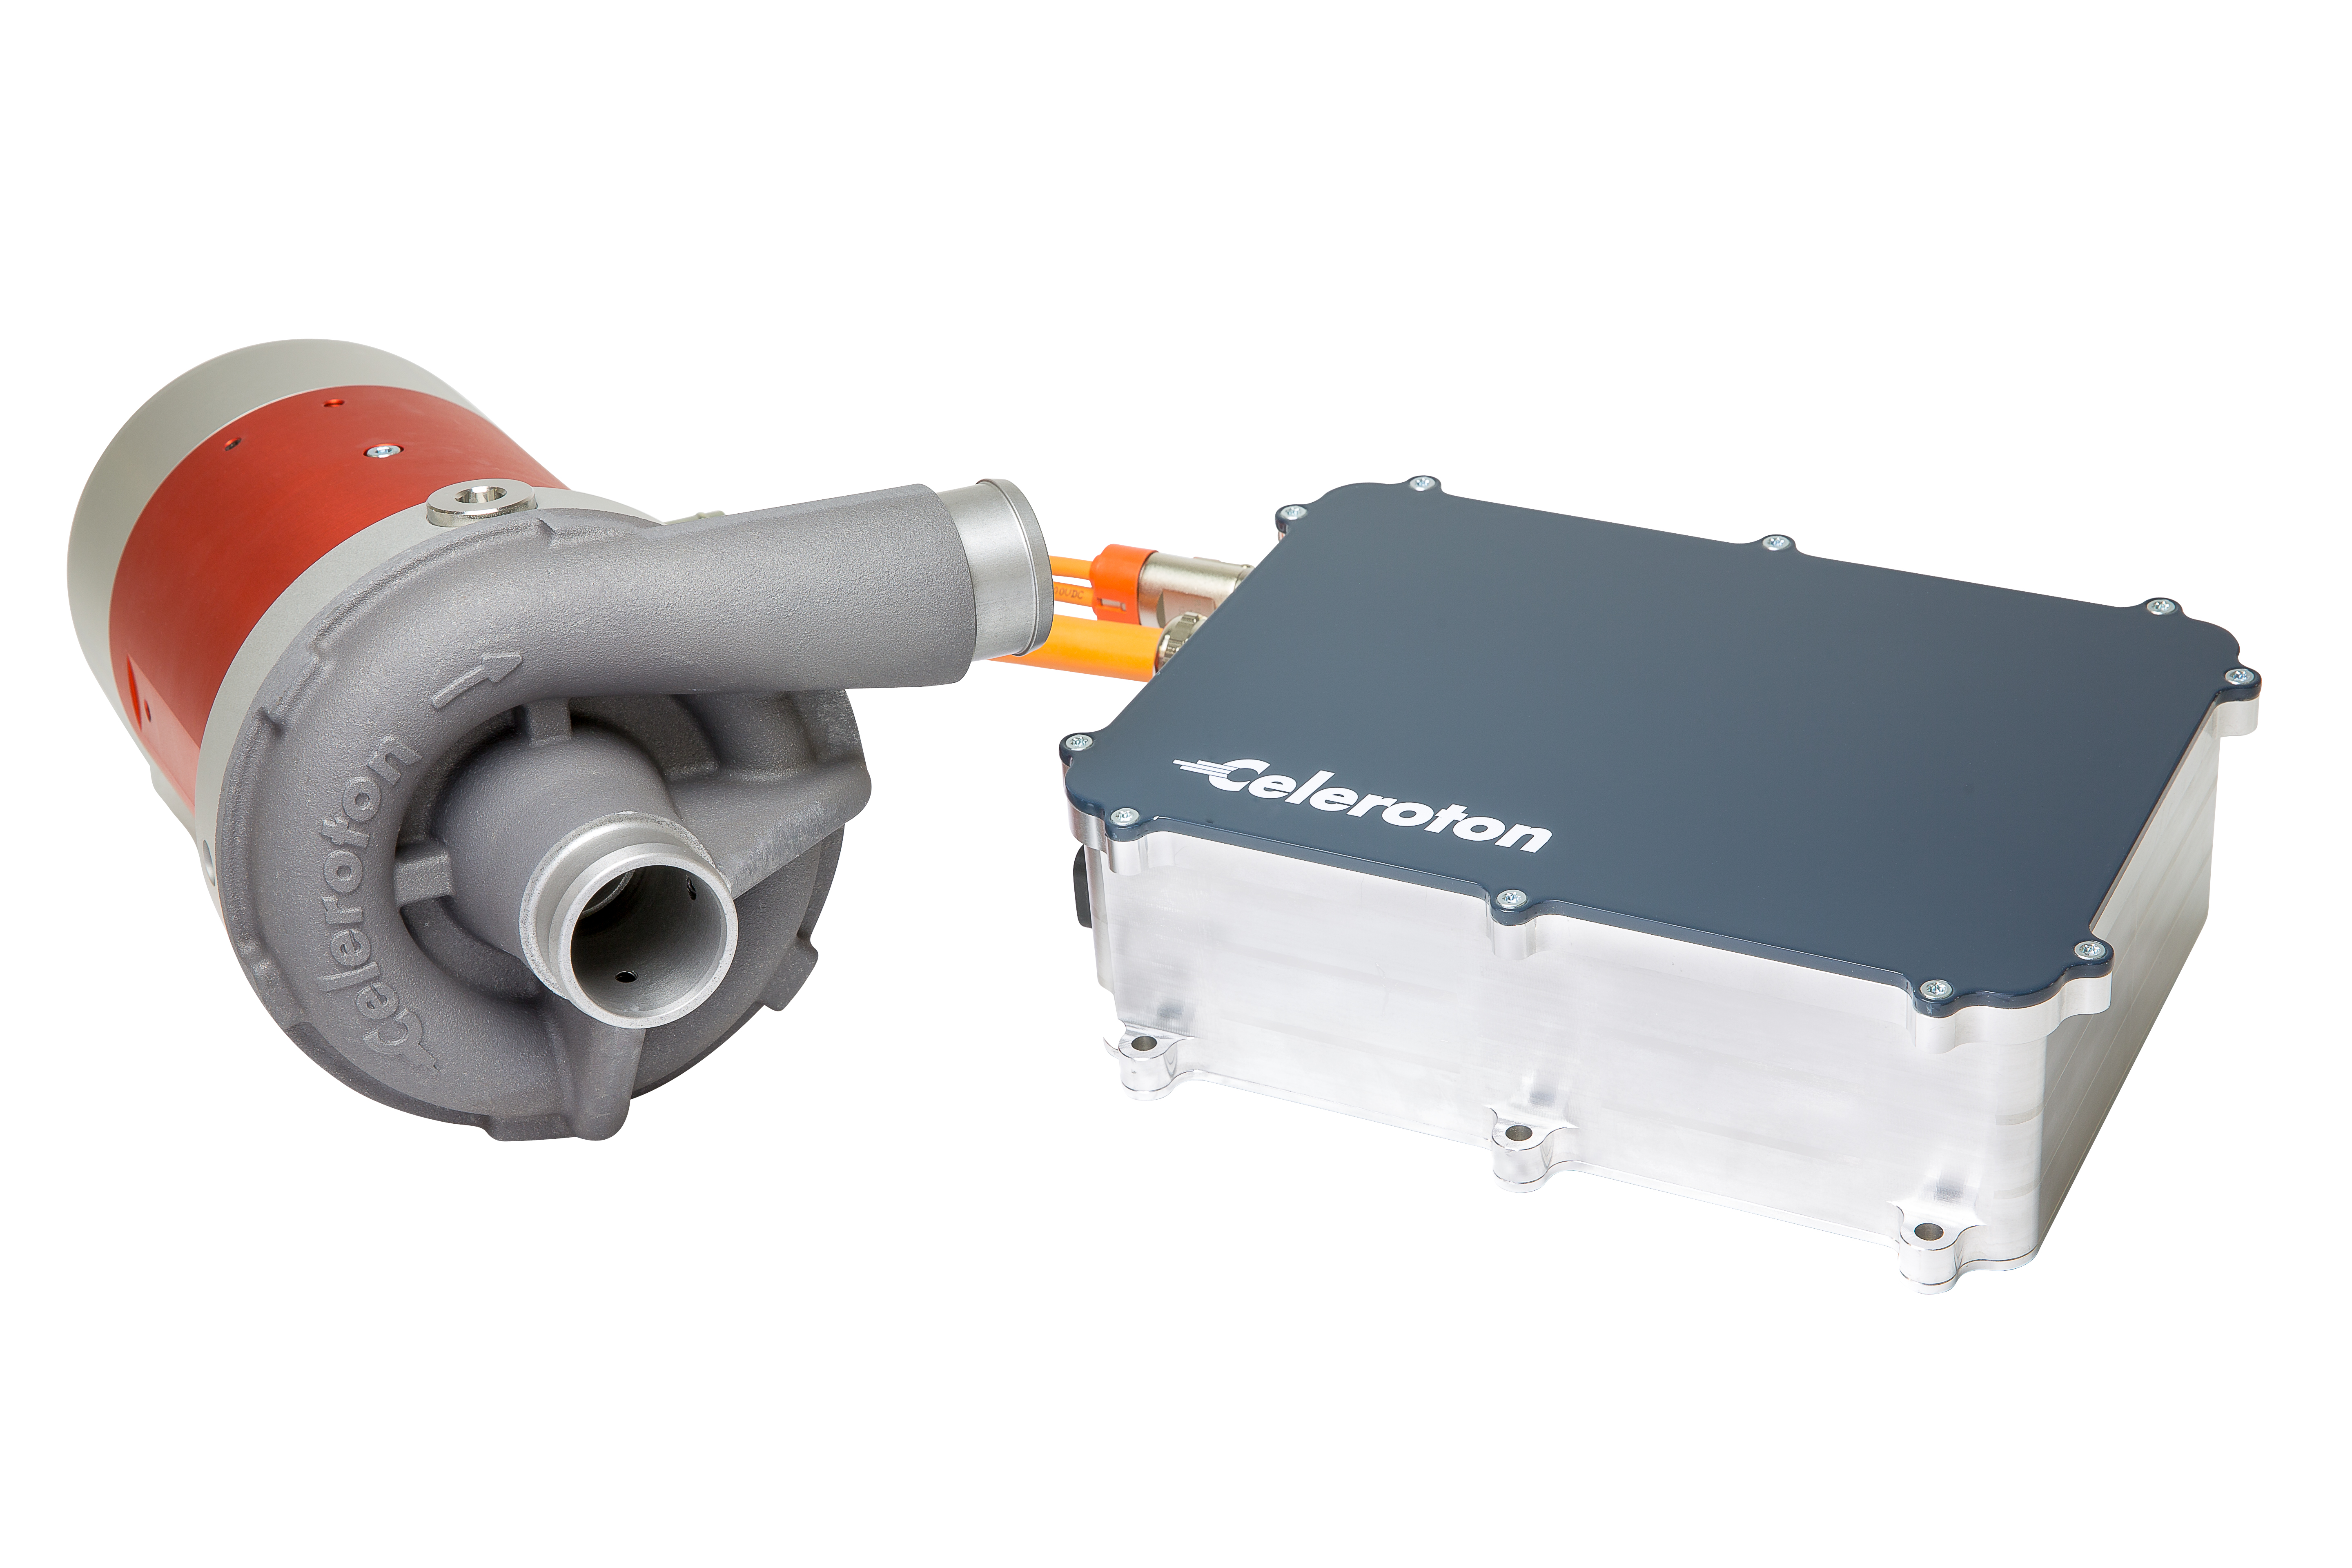 Servodrive CT-25 for sensorless control with converter CC5500-7500